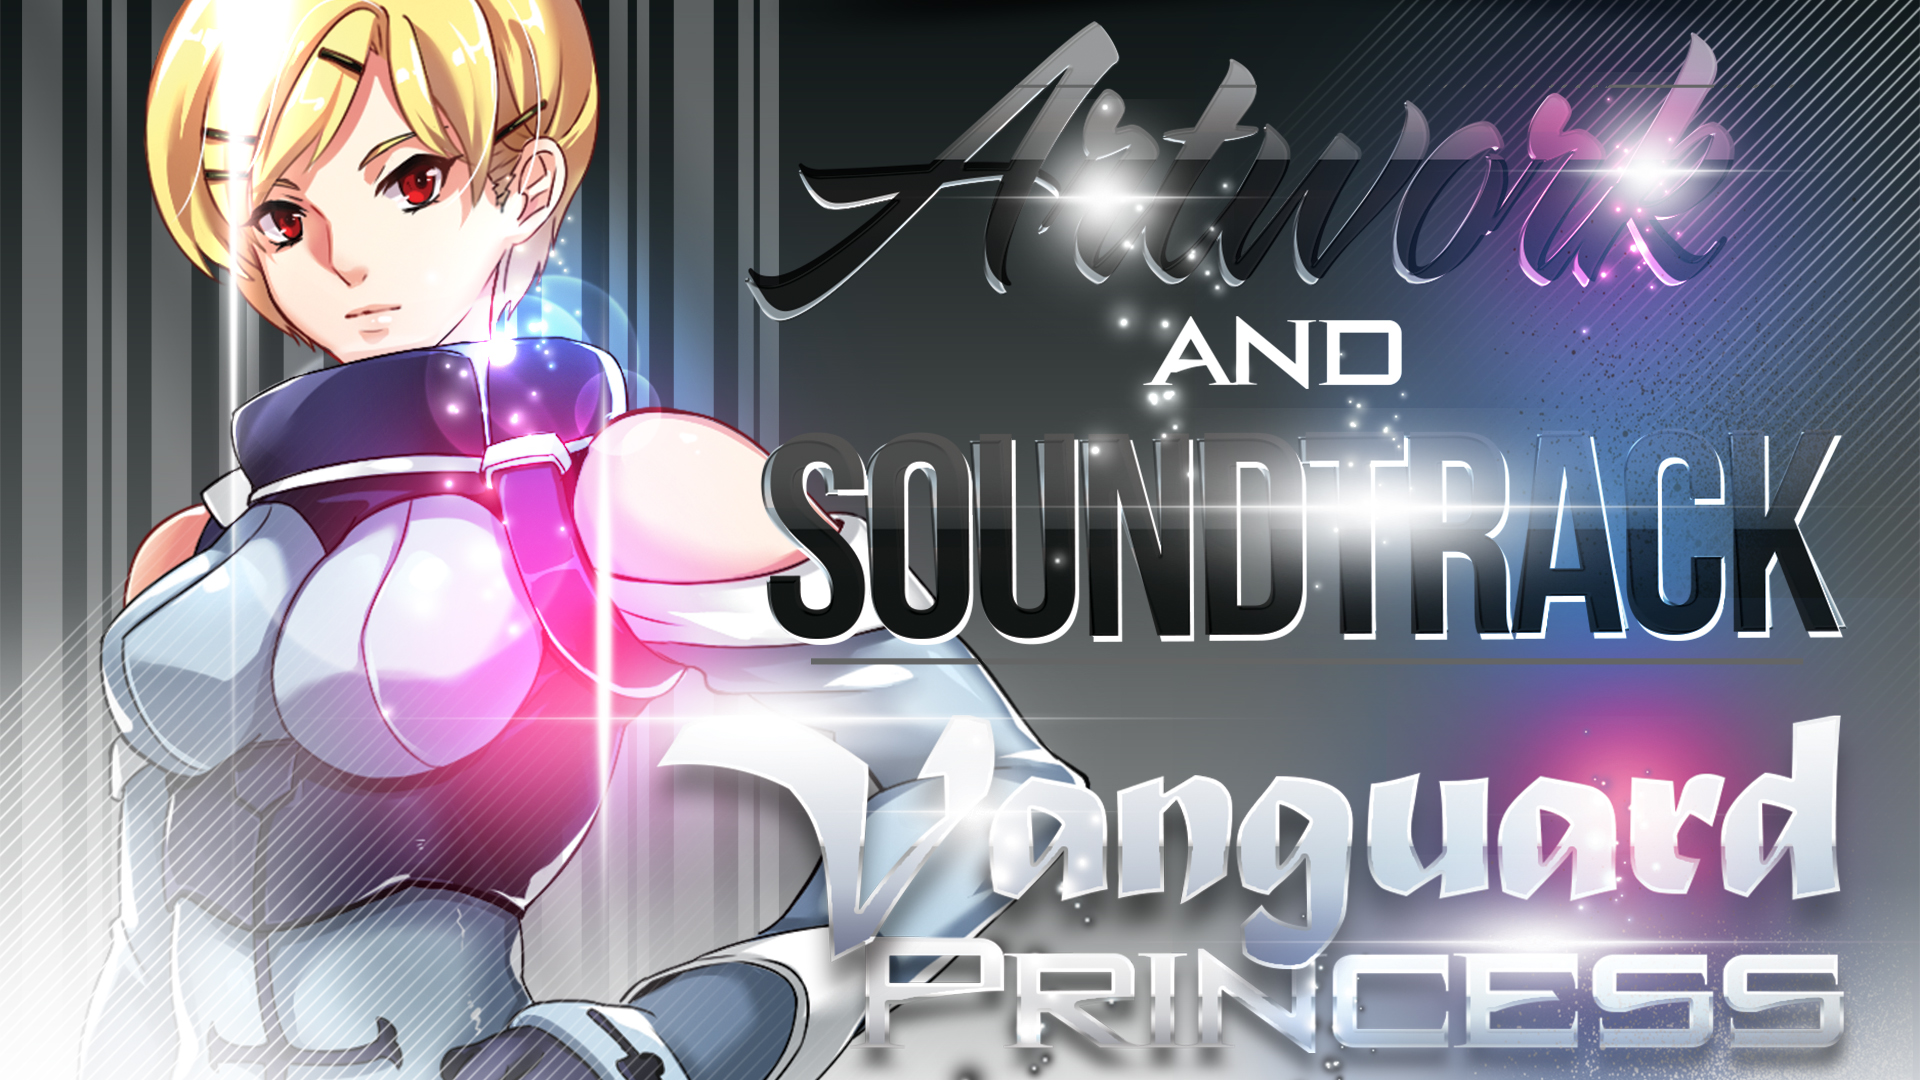 Vanguard Princess Artwork and Soundtrack Featured Screenshot #1